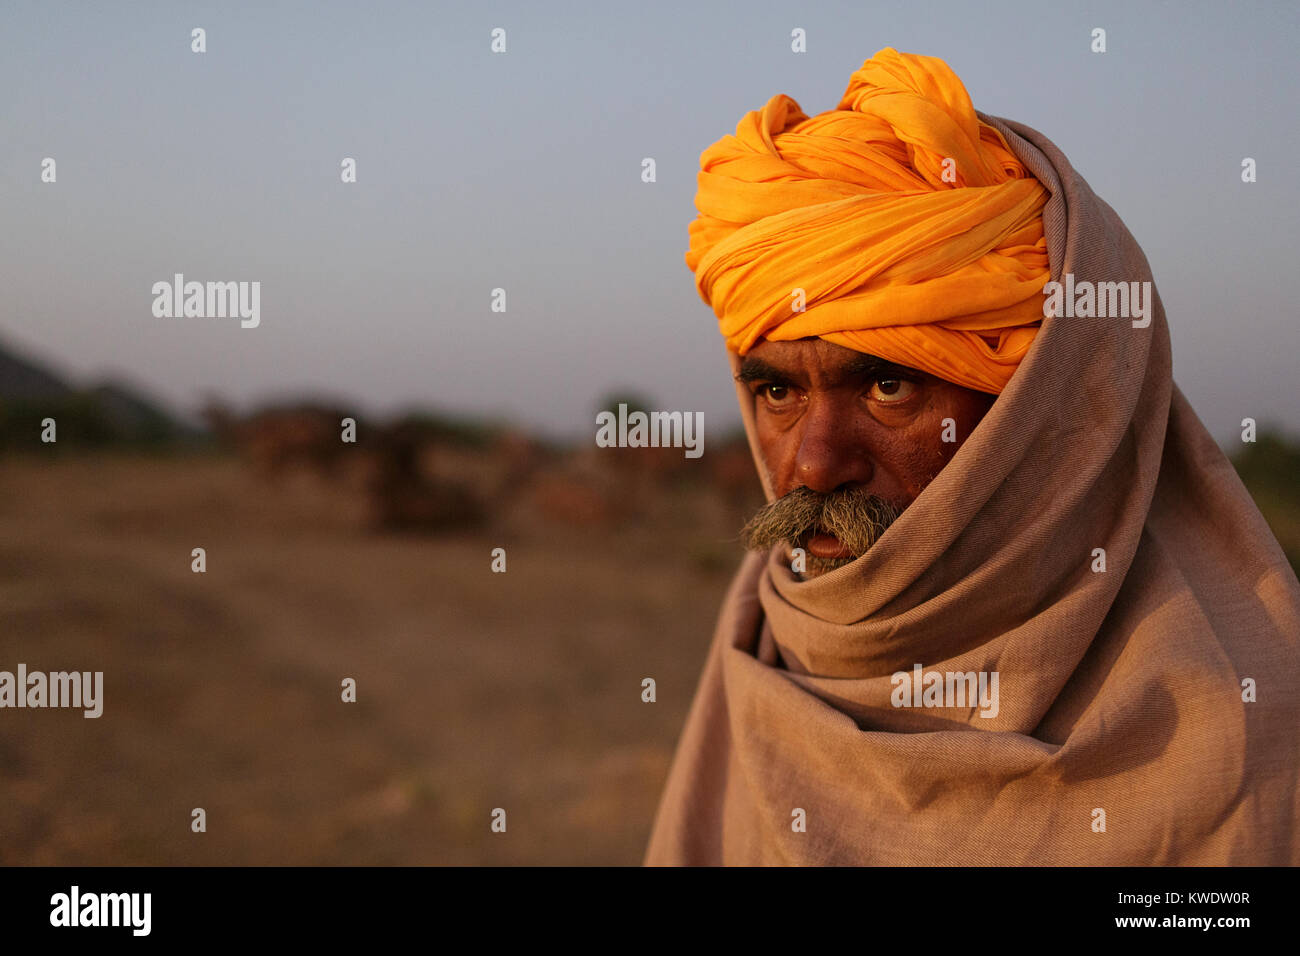 Scene at Pushkar Camel Fair, portrait of a trader wearing orange turban, covered with blanket, Pushkar, Rajasthan, India Stock Photo